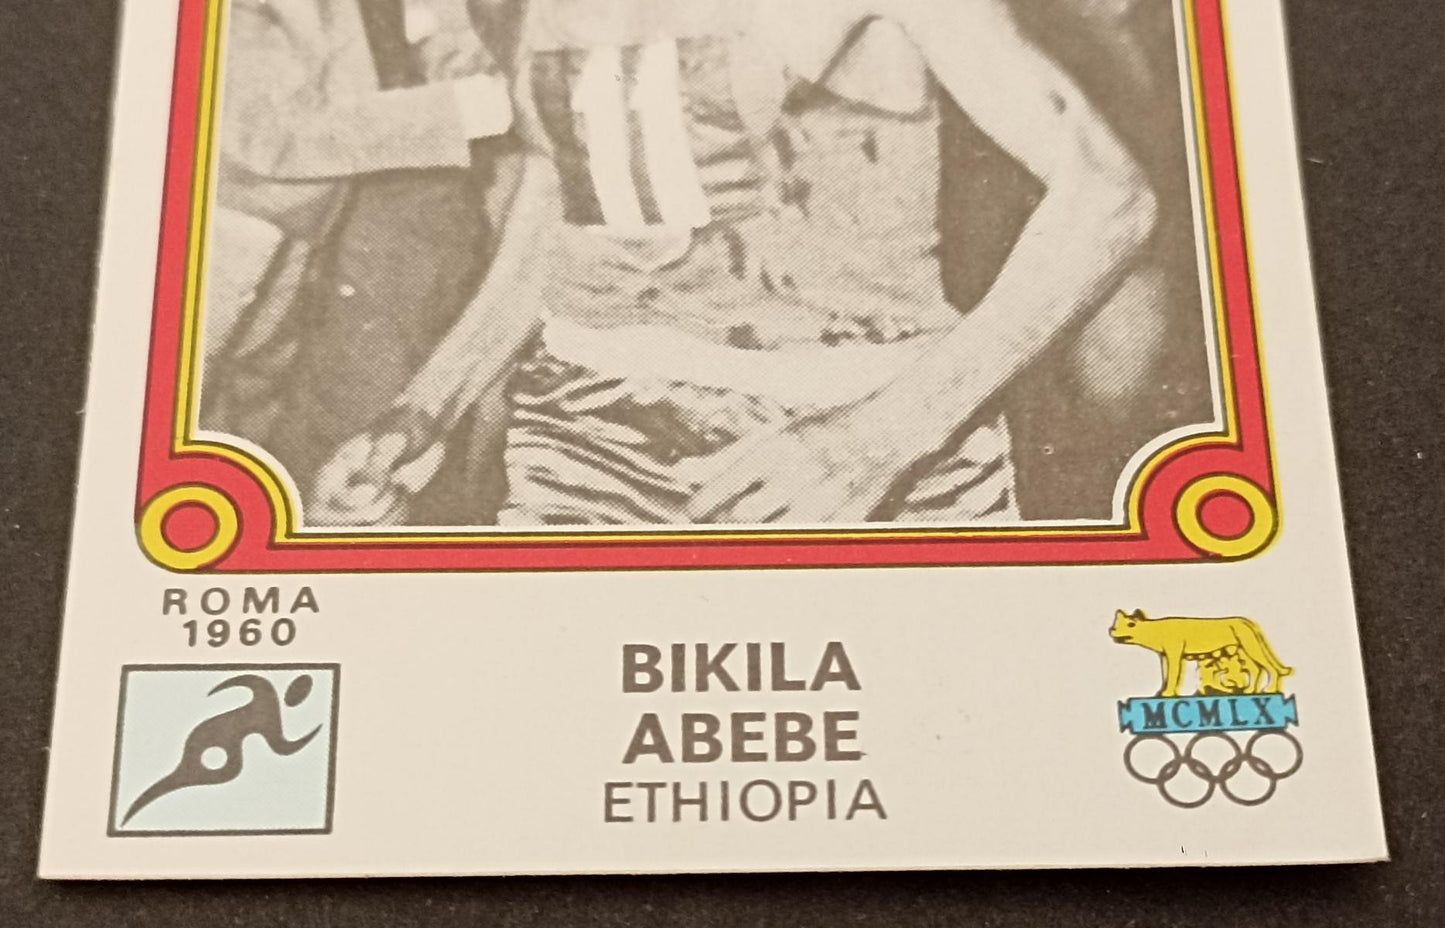 ATHLETICS CARD - PANINI - MONTREAL 1976 - ABEBE BIKILA - #78 - MINT